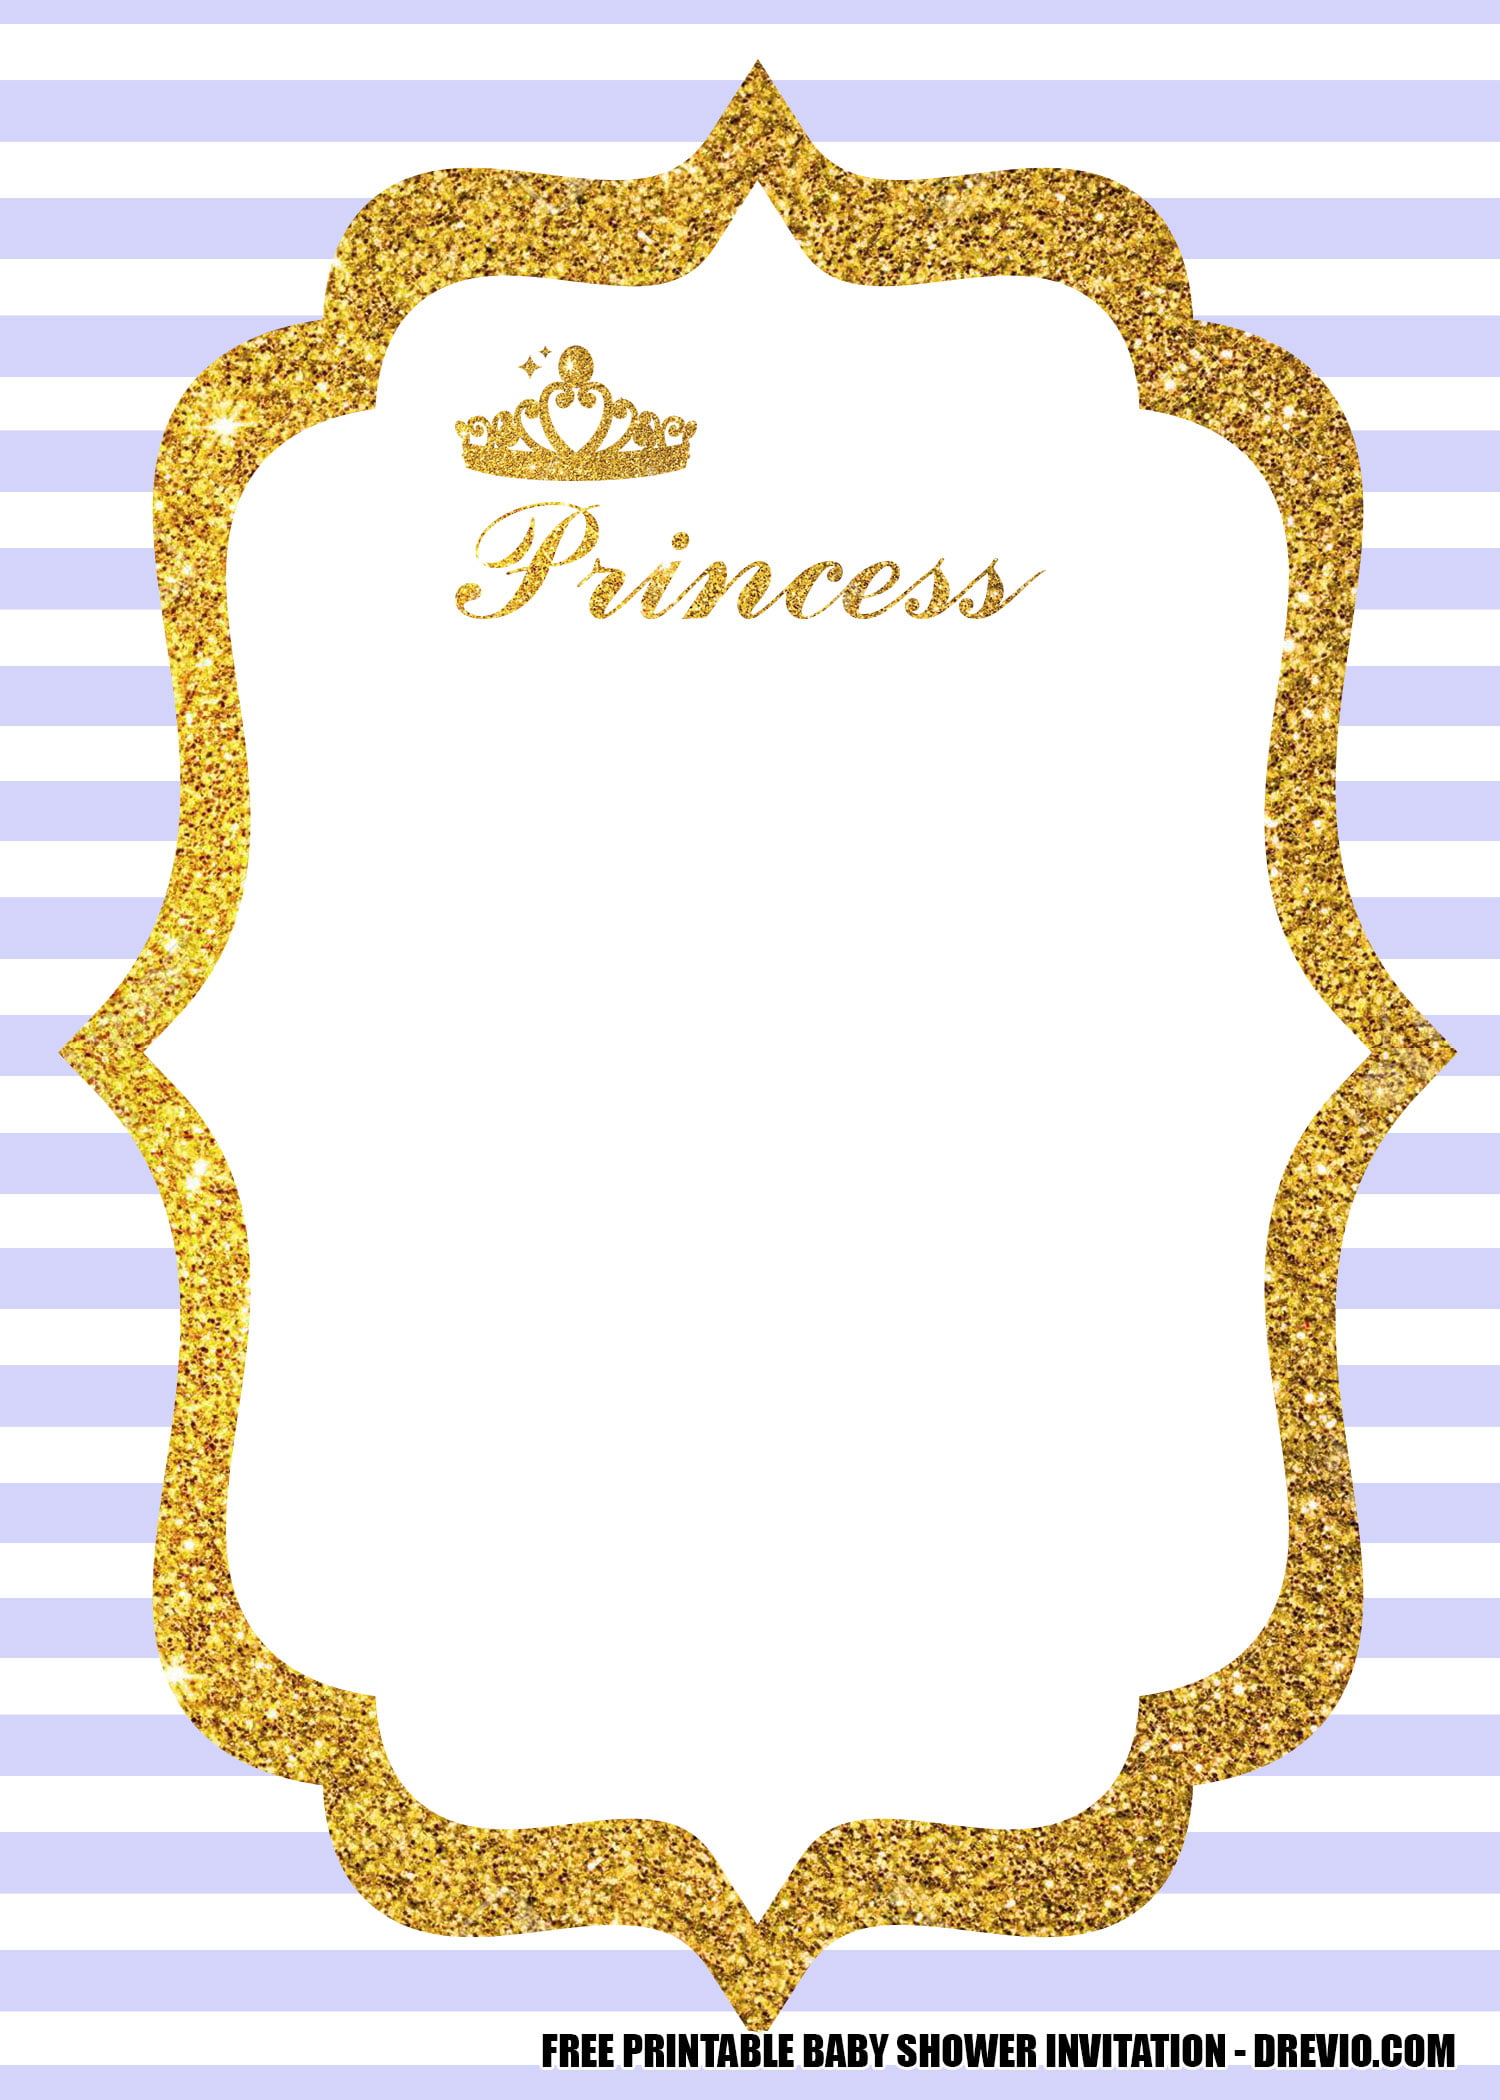 pink-princess-baby-shower-invitation-3-download-hundreds-free